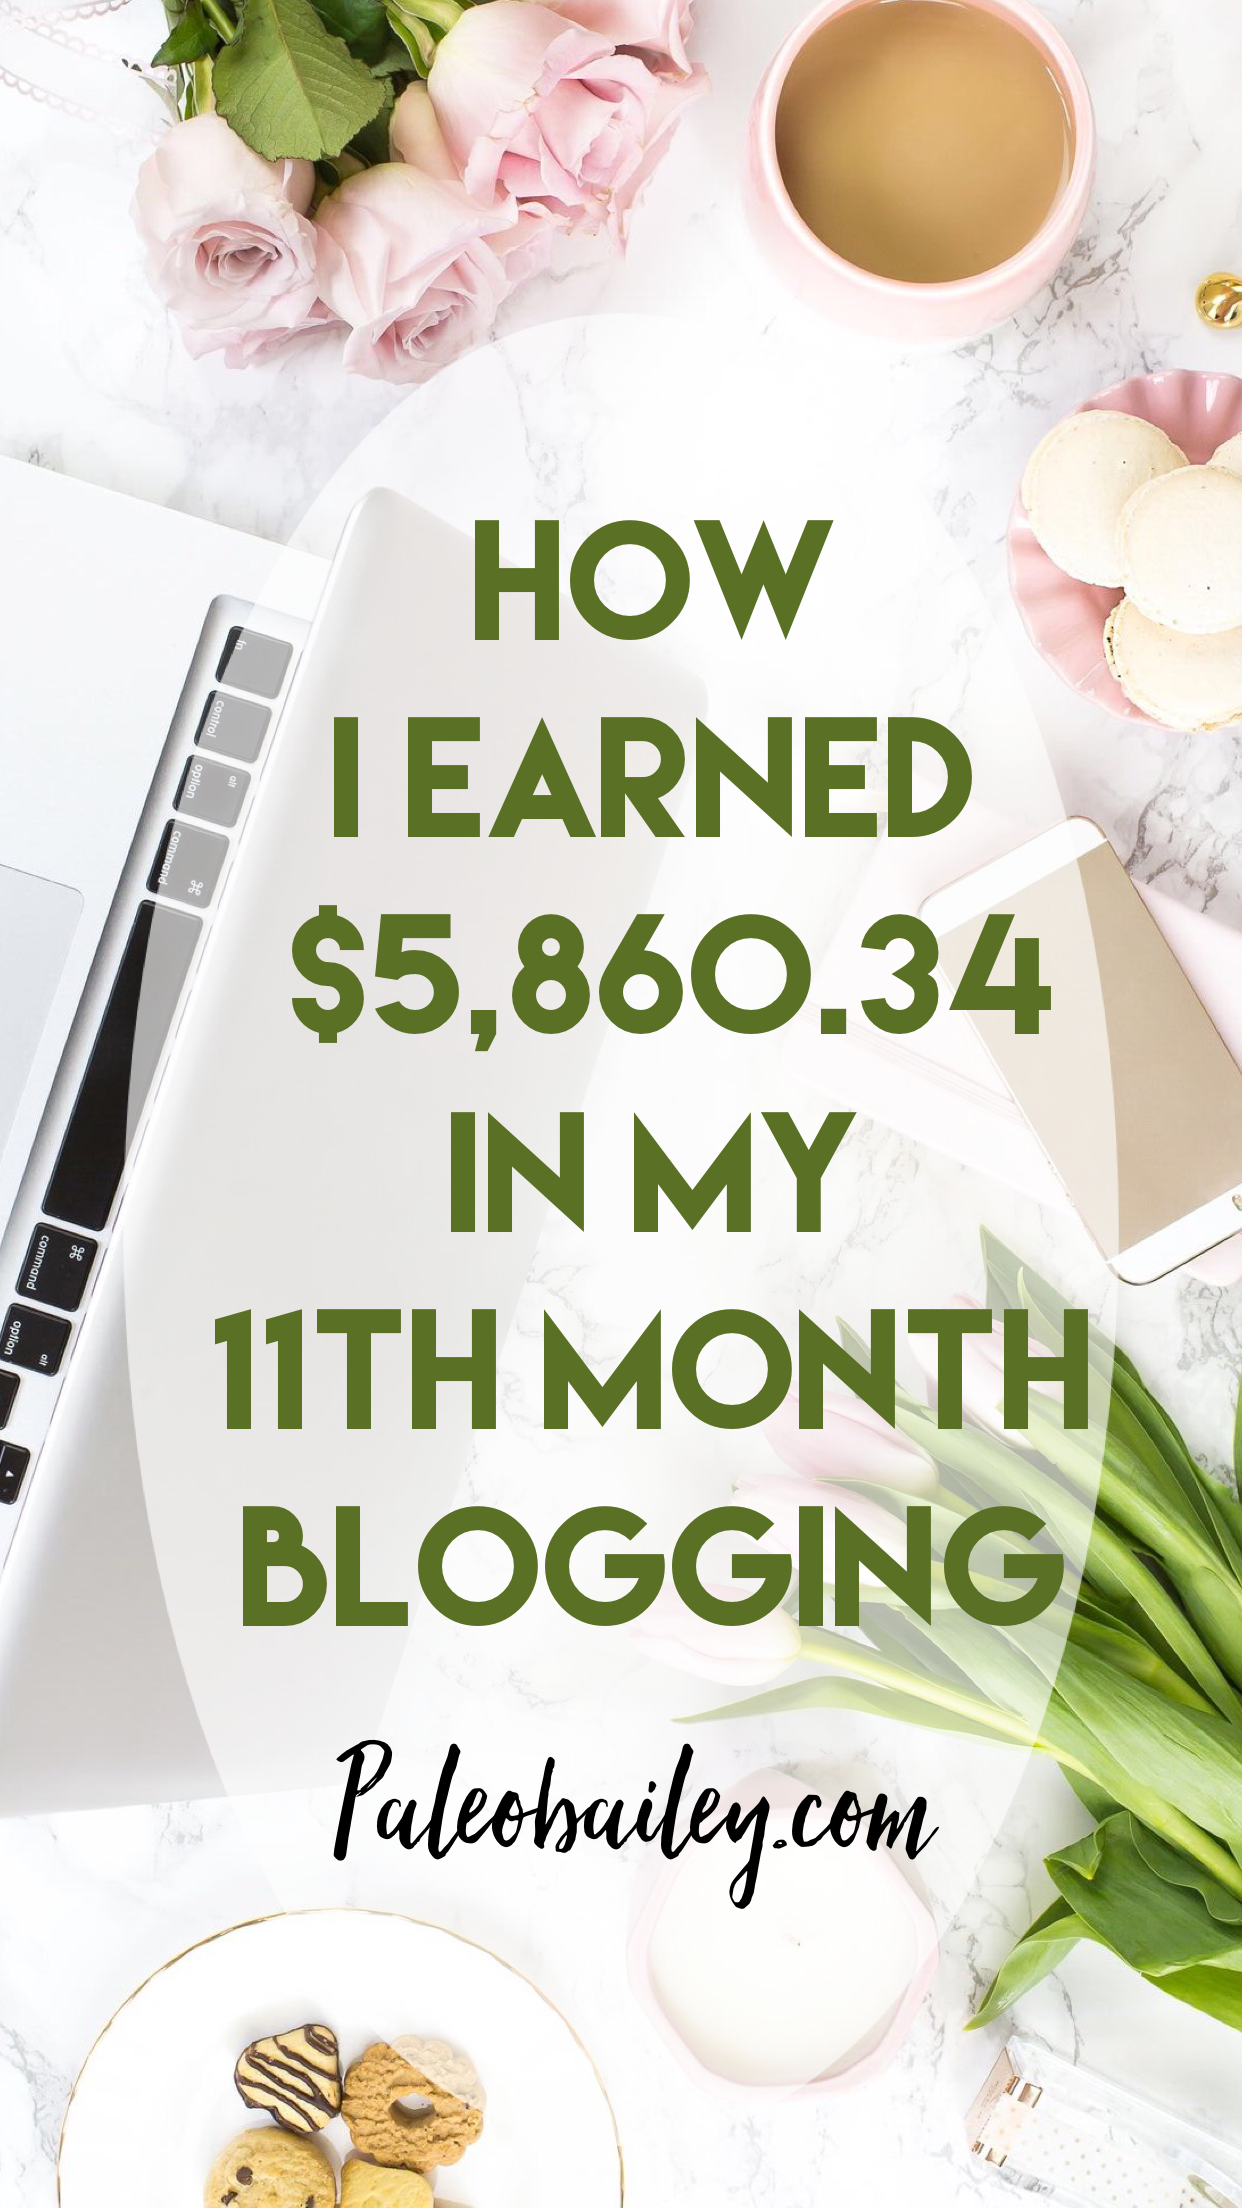 11th month blogging